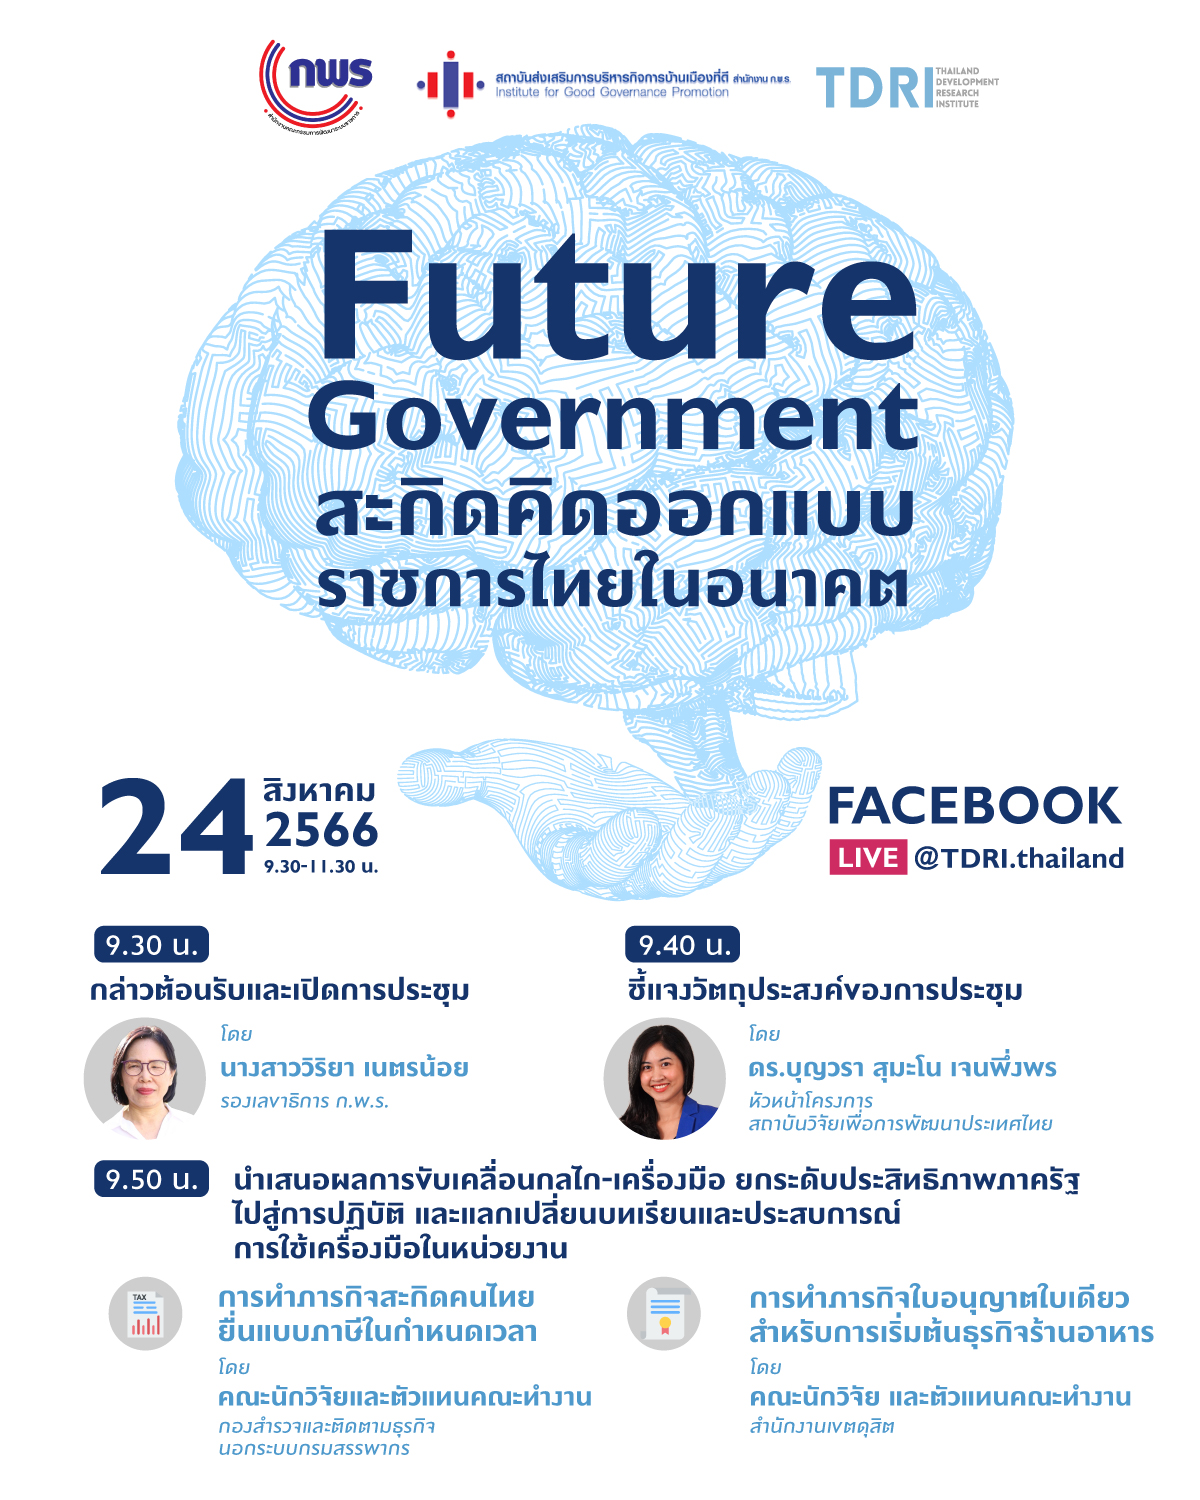 “Future Government สะกิดคิดออกแบบราชการไทยในอนาคต”